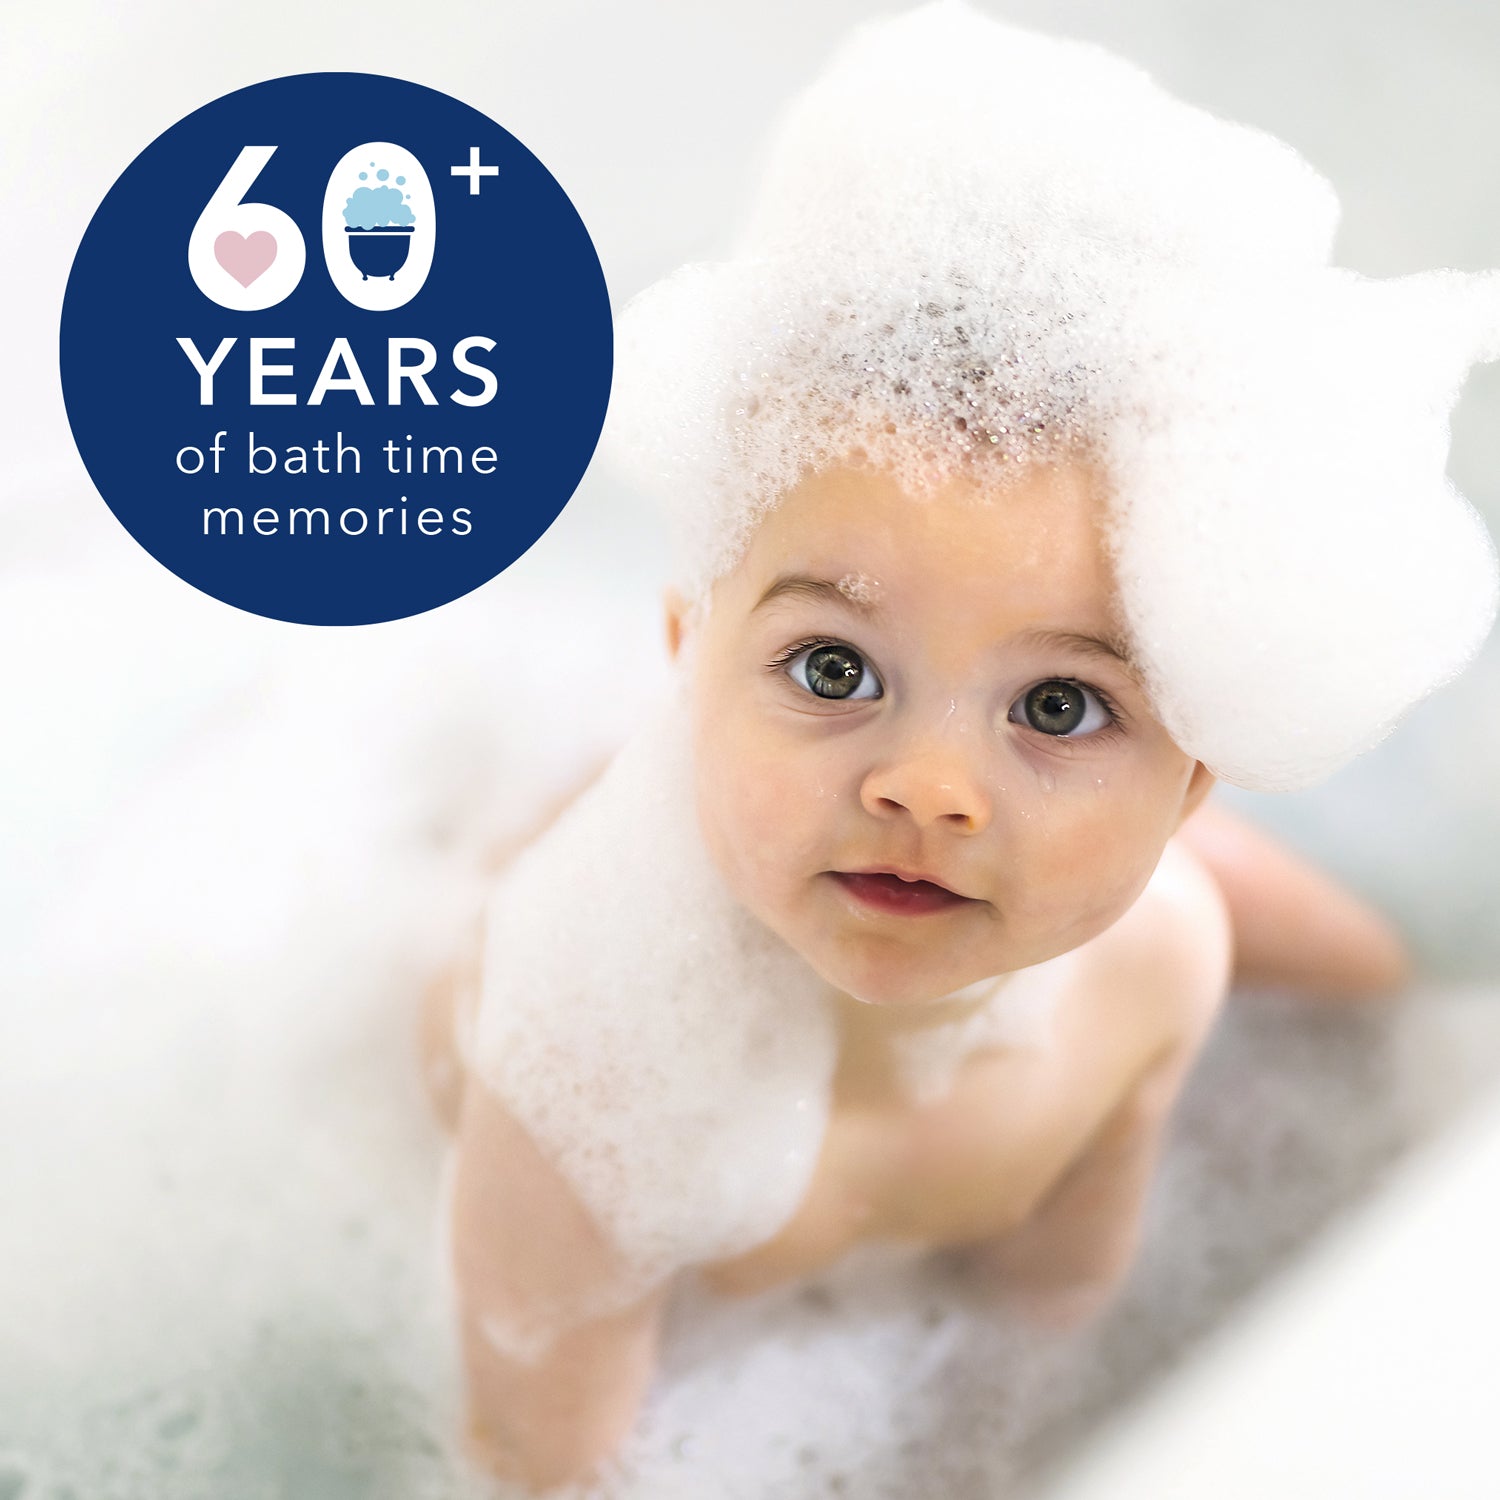 Baby Bubble Ultra Gentle Body Wash & Shampoo